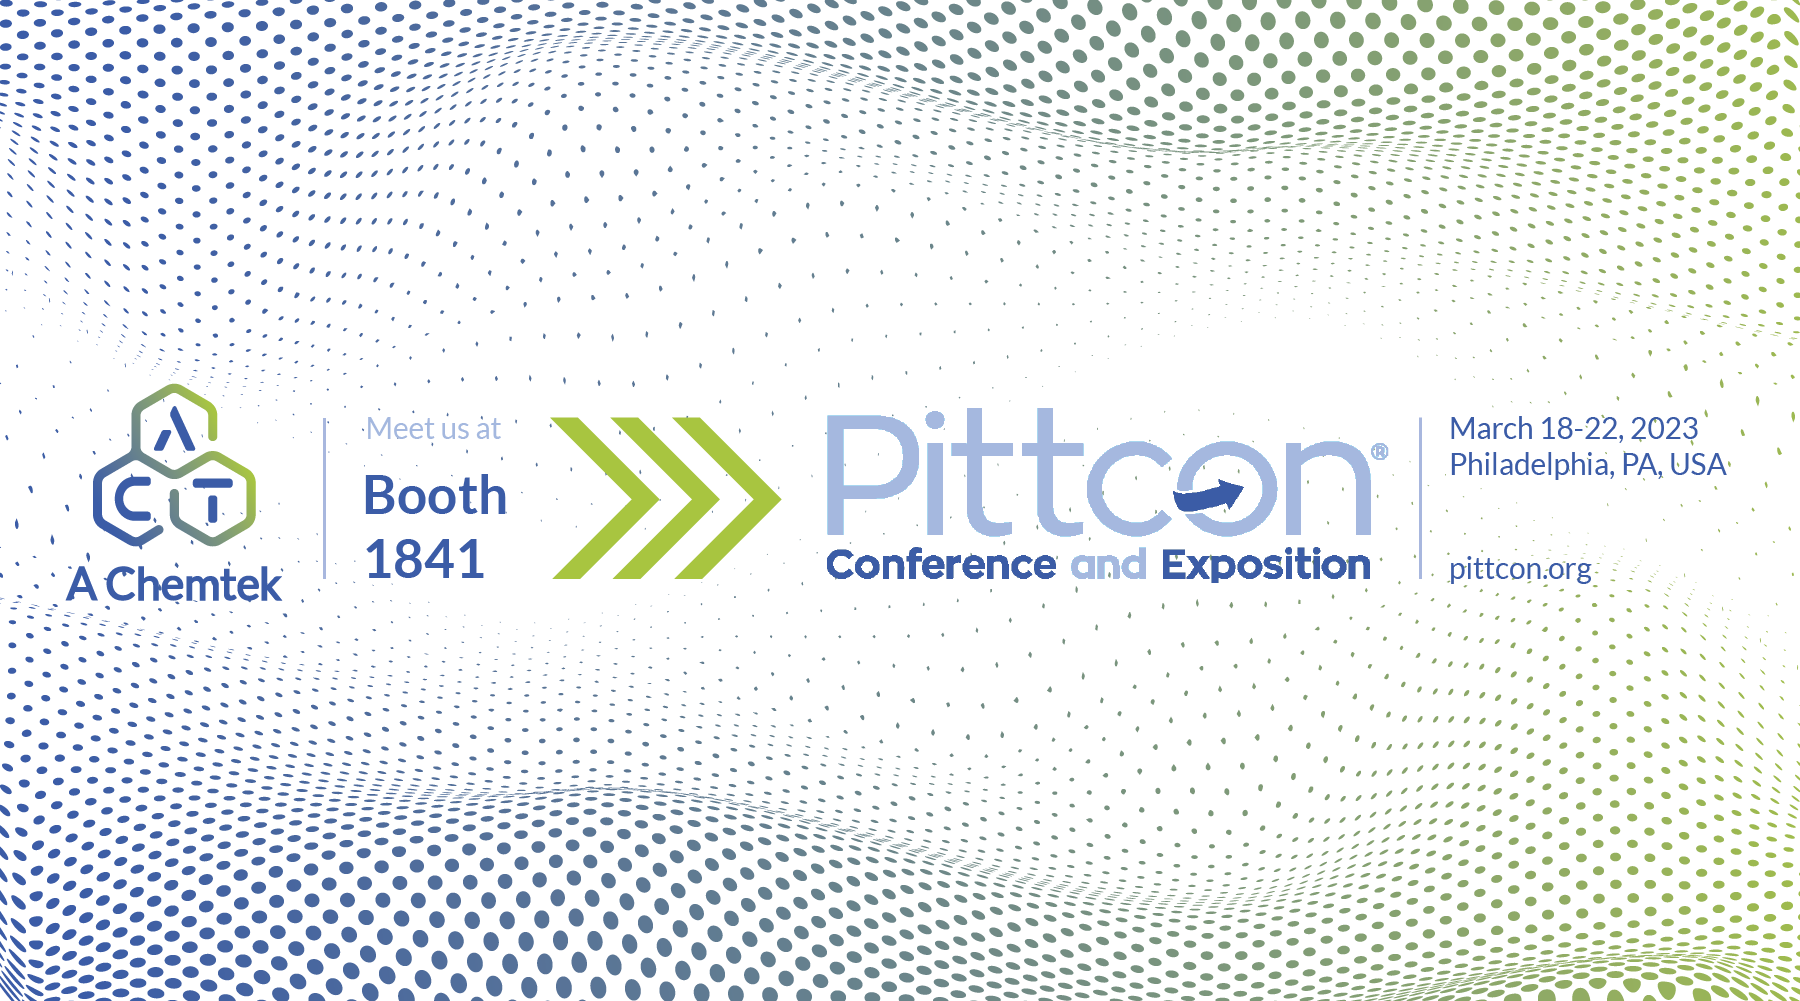 Meet us at Pittcon 2023 in Philadelphia